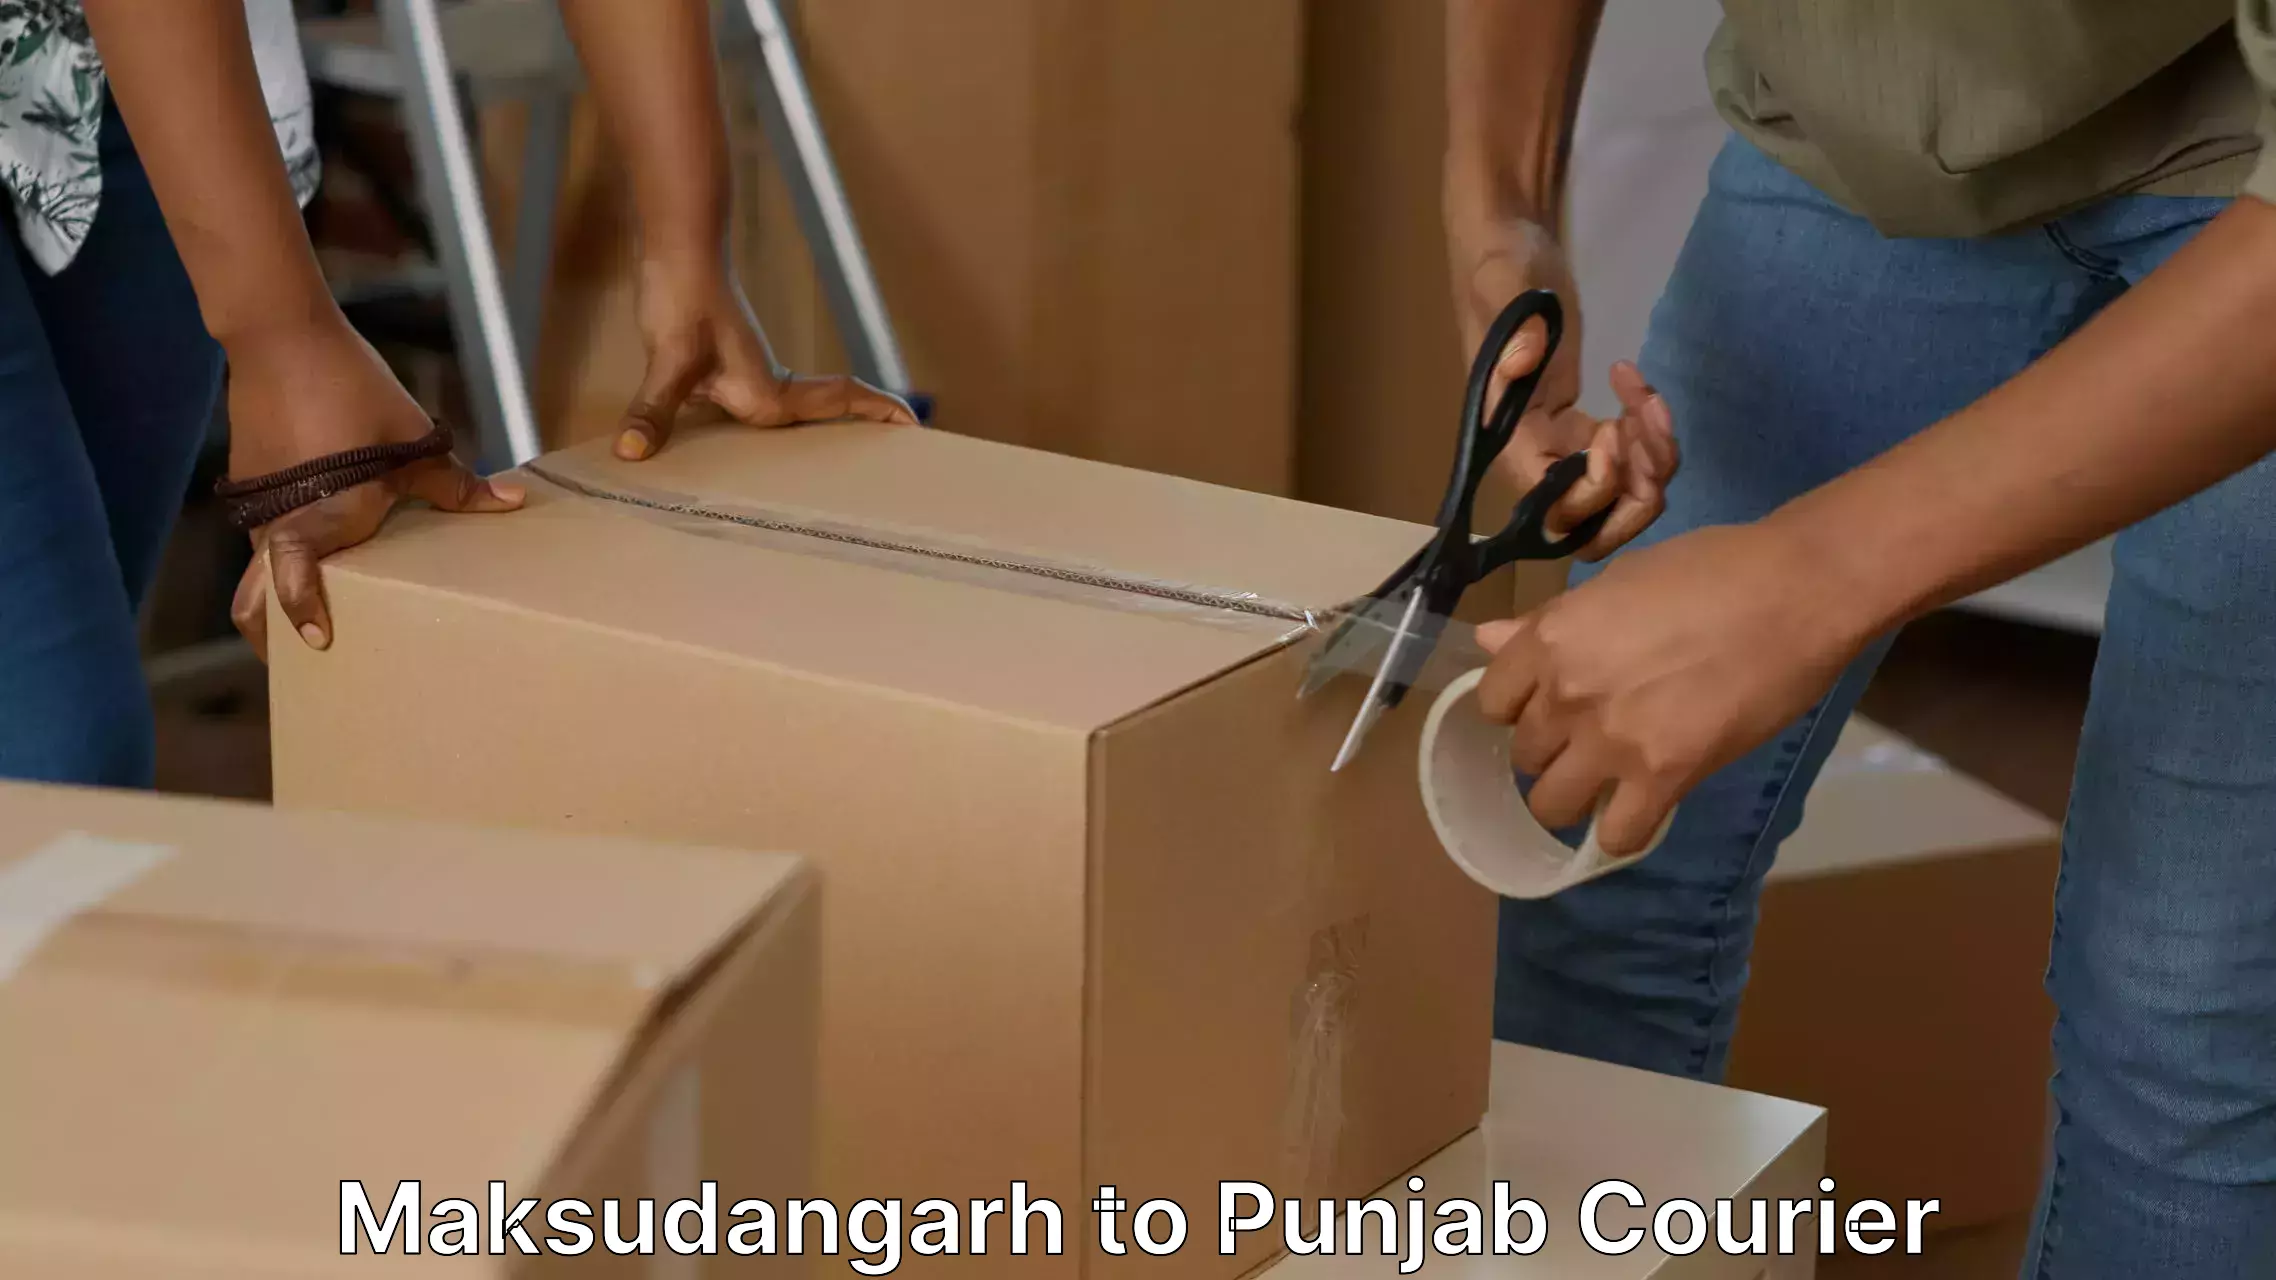 Furniture transport company Maksudangarh to Punjab